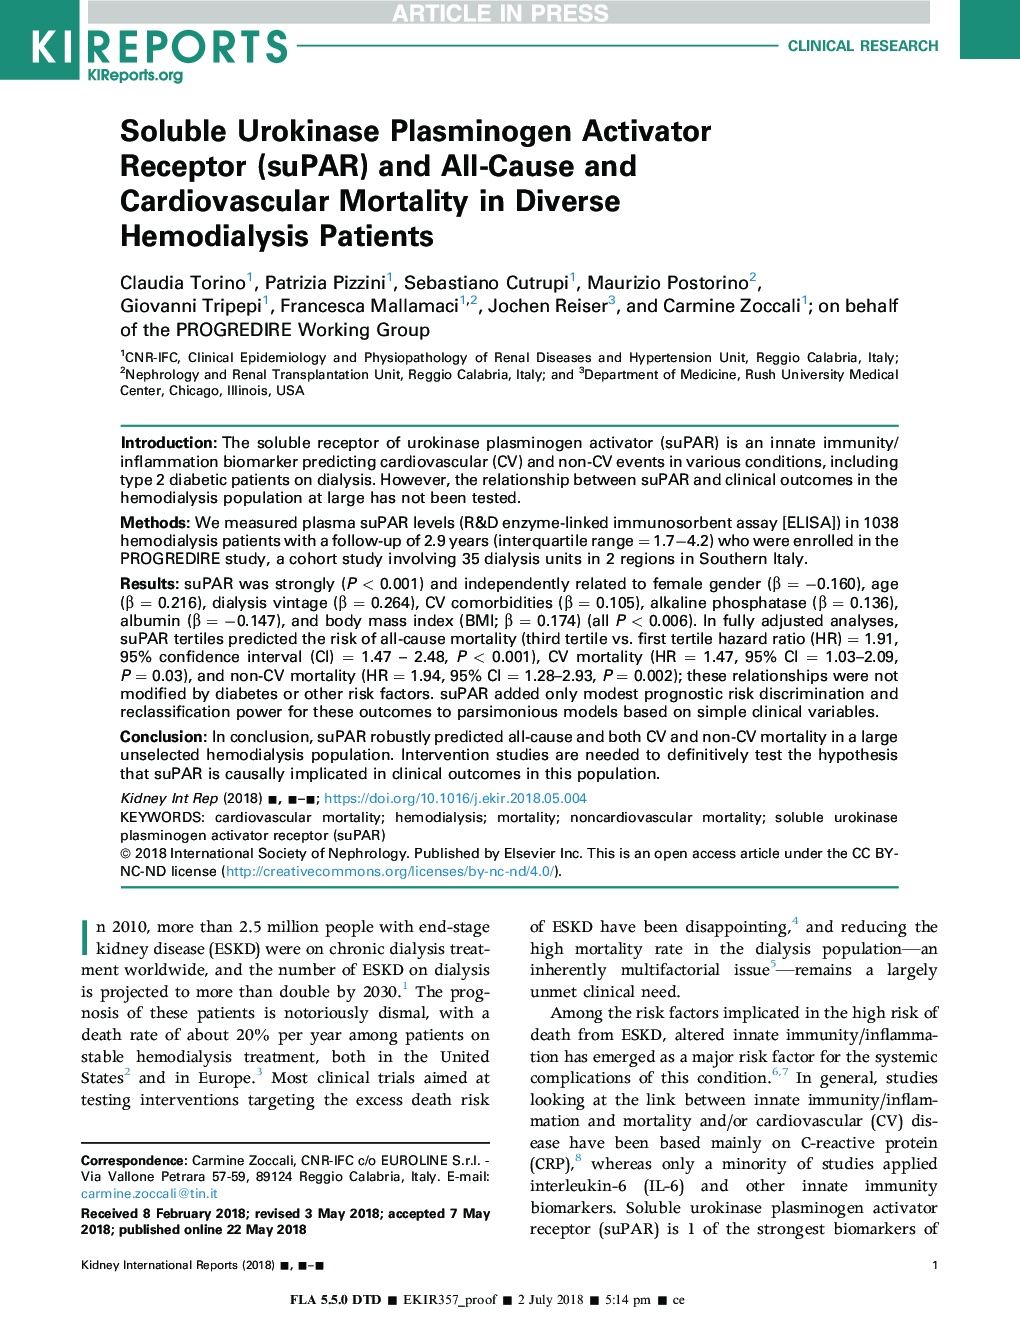 Soluble Urokinase Plasminogen Activator Receptor (suPAR) and All-Cause and Cardiovascular Mortality in Diverse Hemodialysis Patients